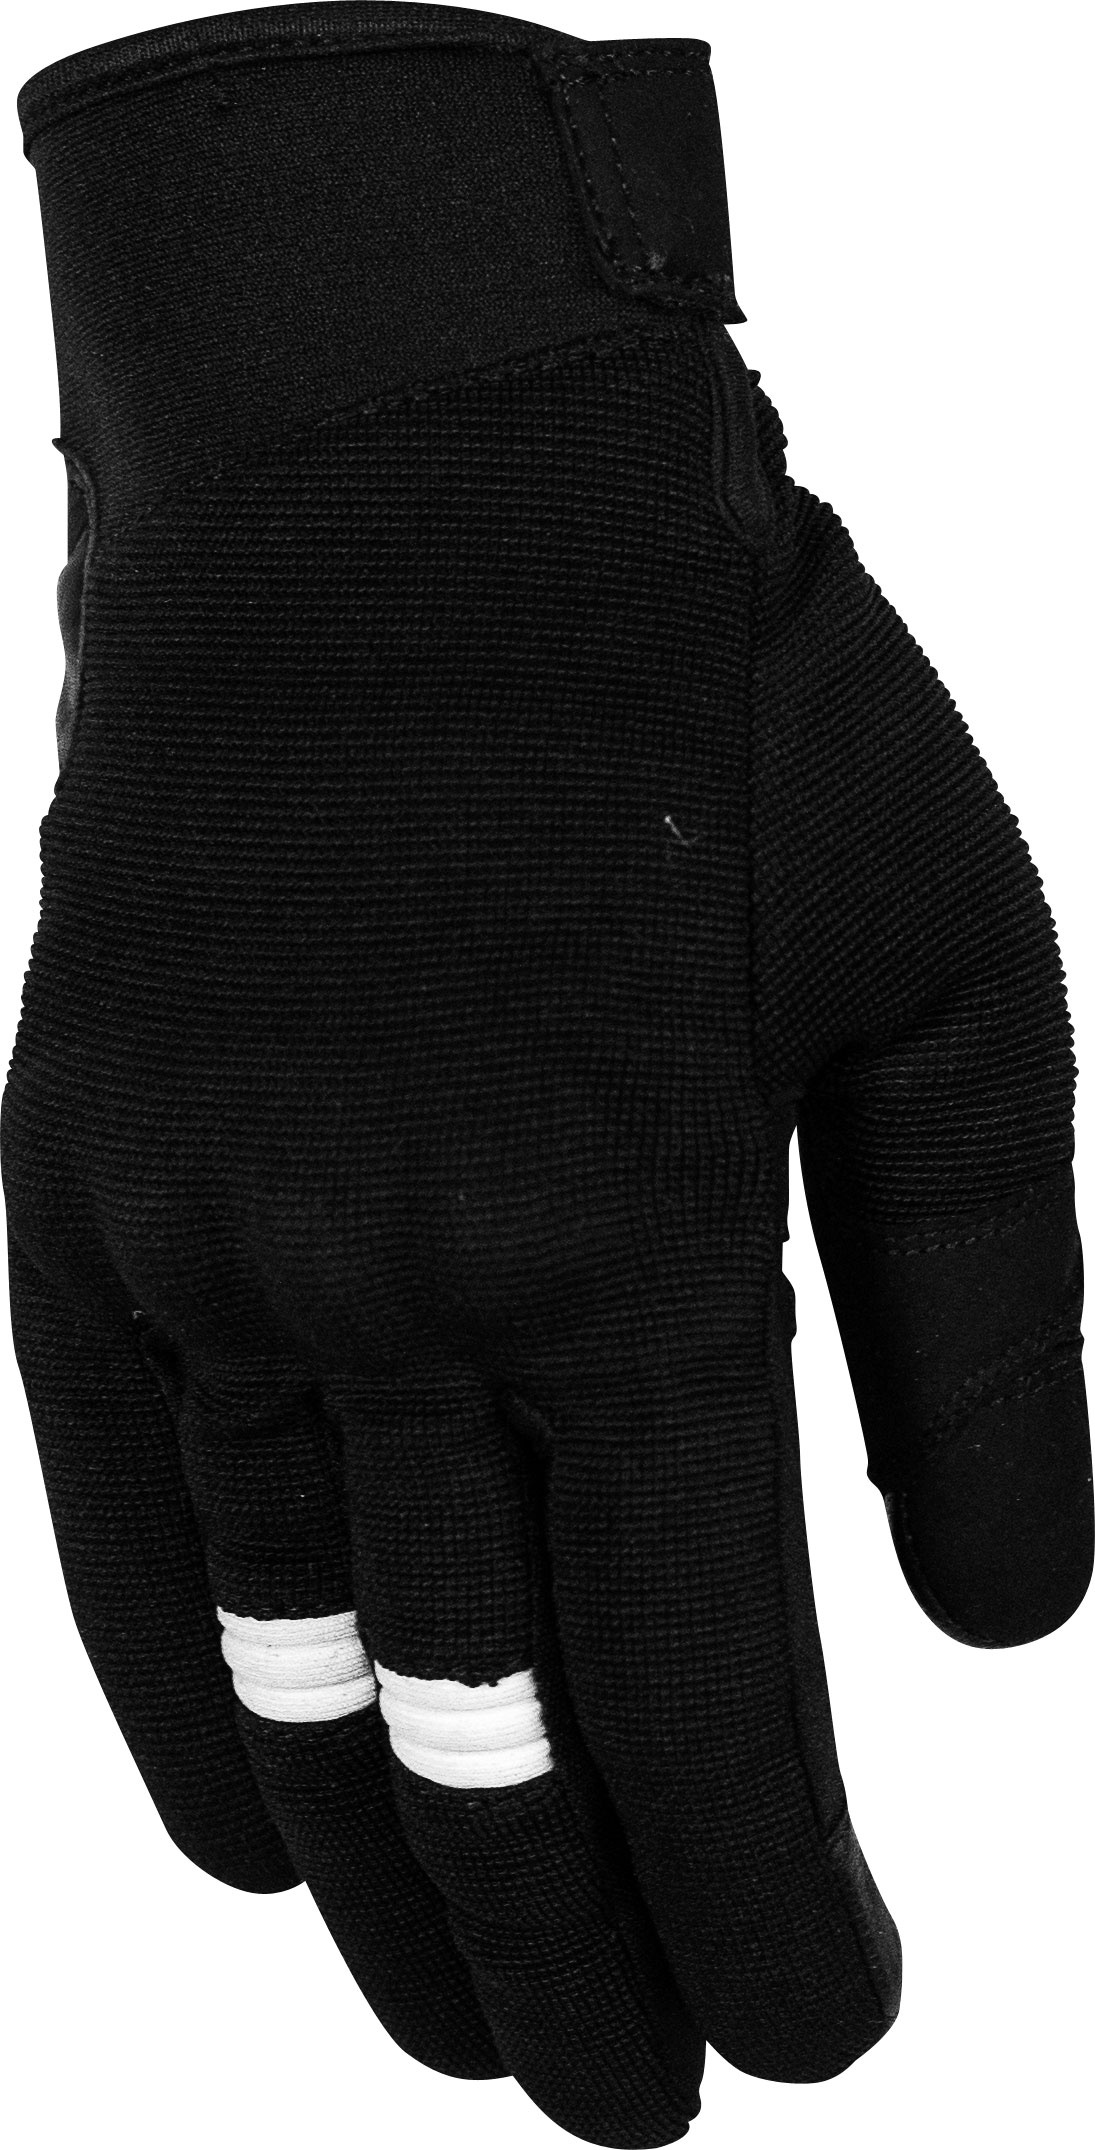 Rusty Stitches Bonnie V2, gants femmes - Noir/Blanc - L